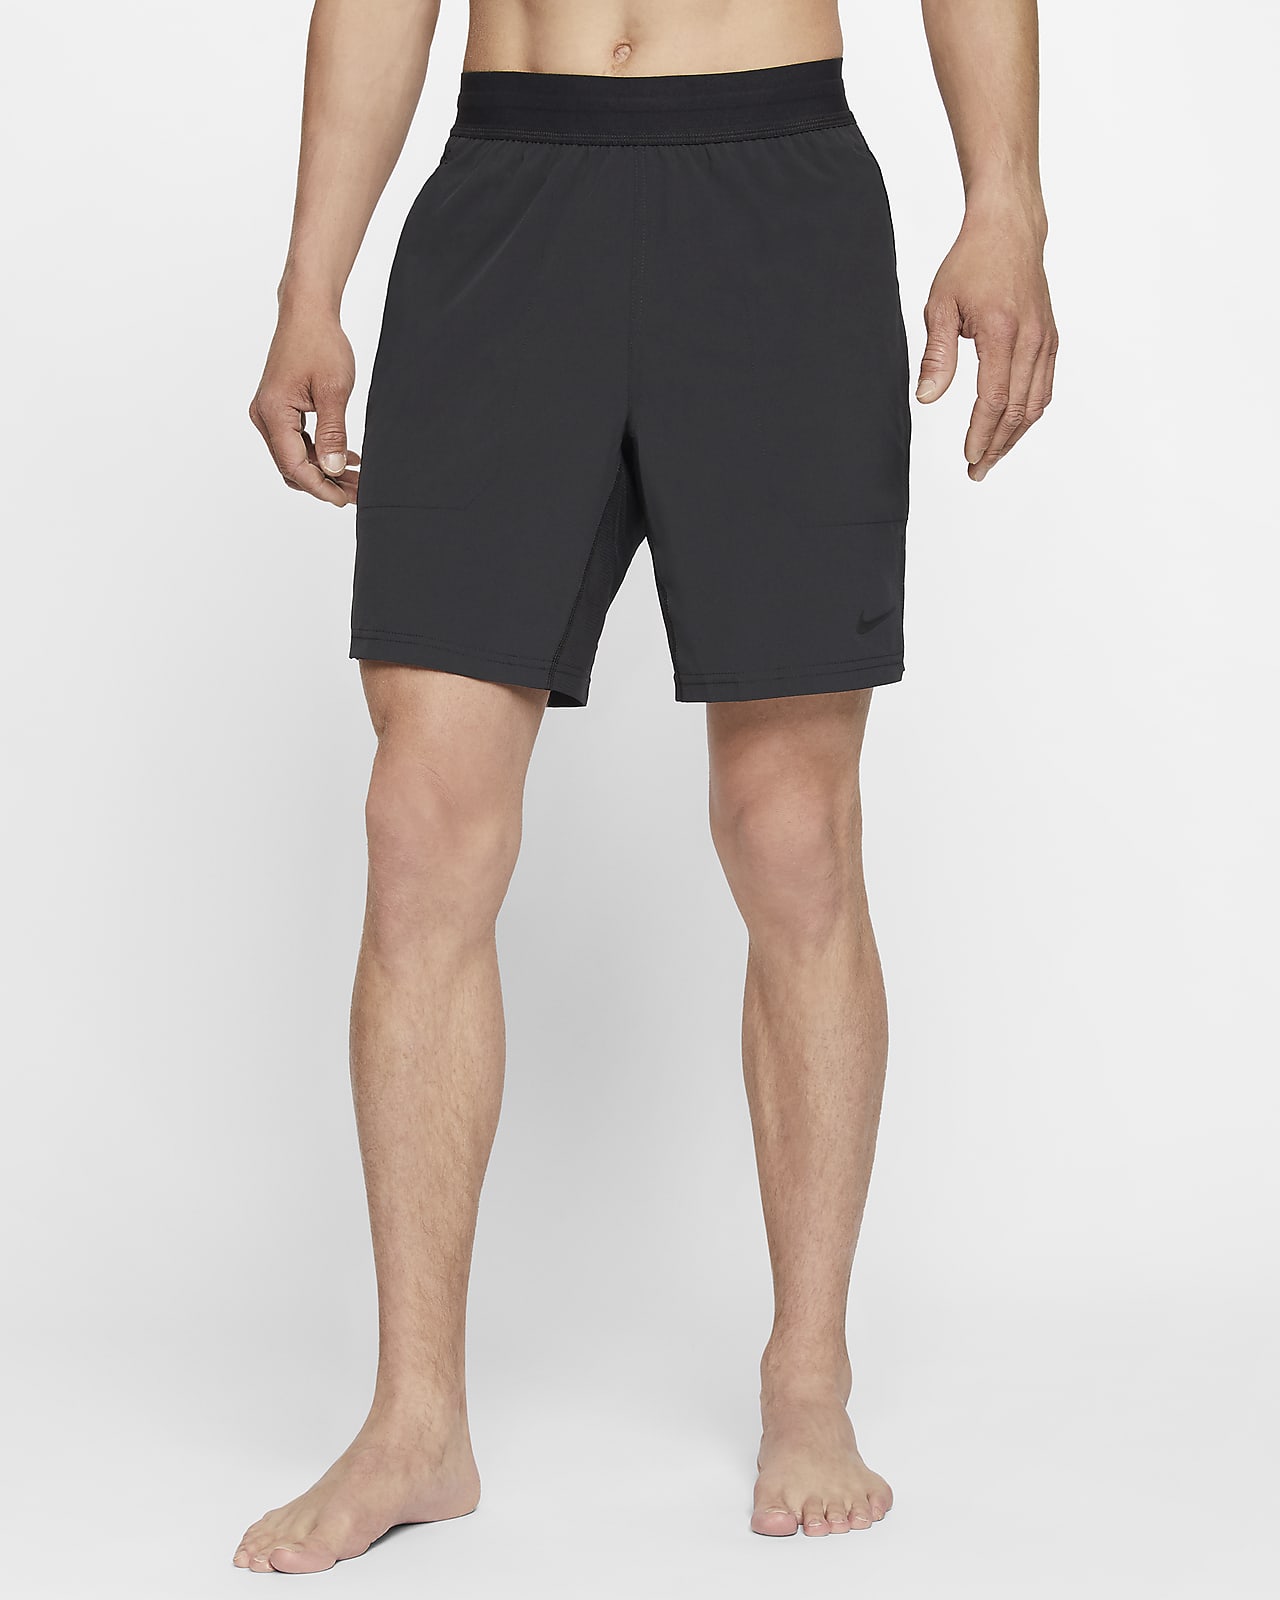 nike men's flex 8 training shorts